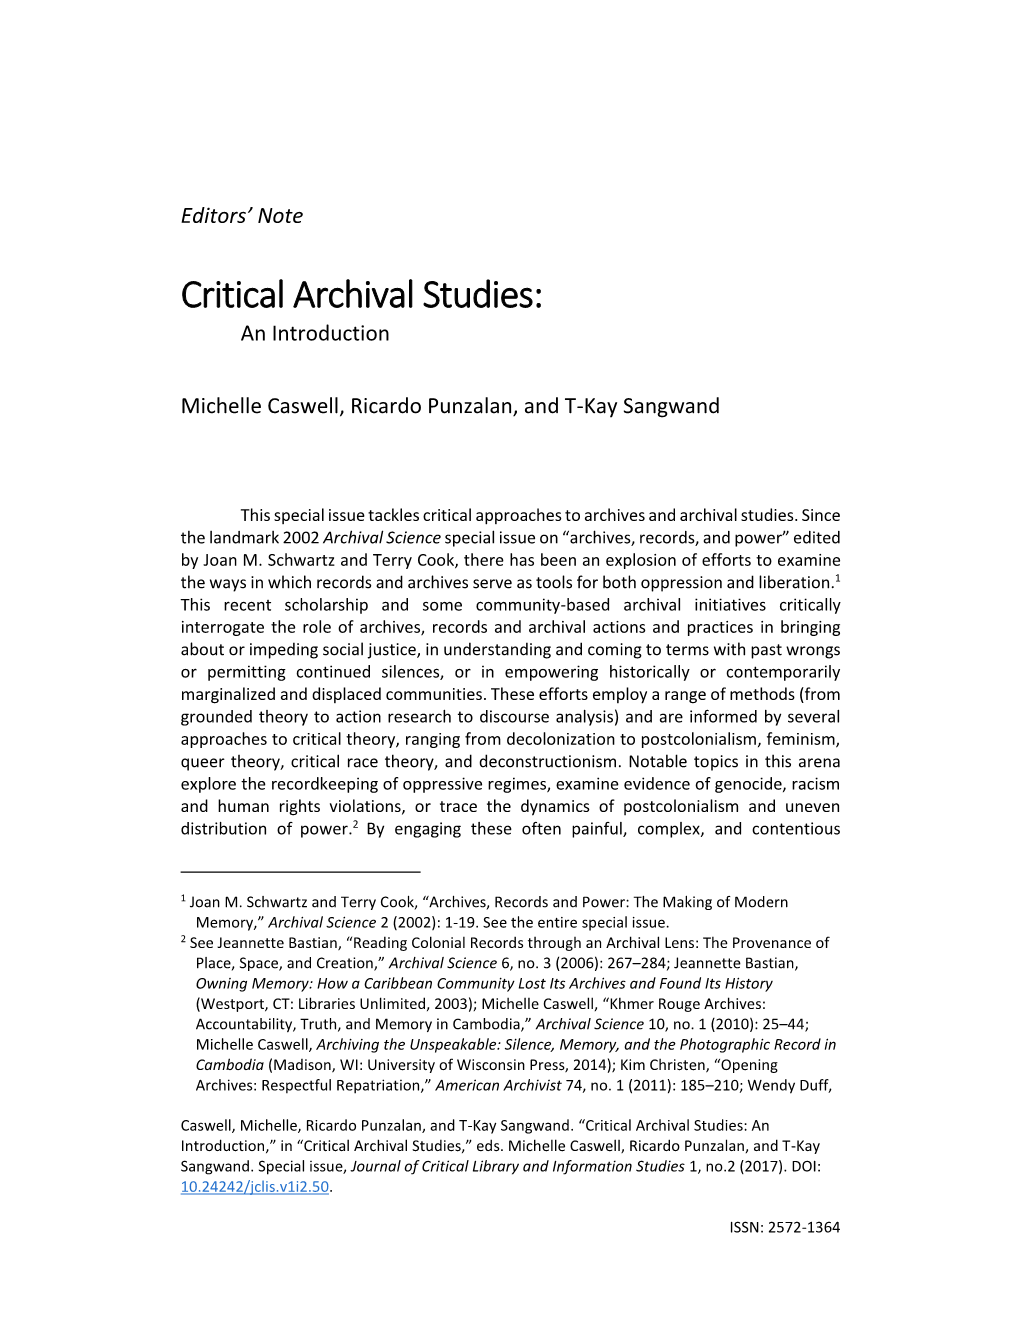 Critical Archival Studies: an Introduction